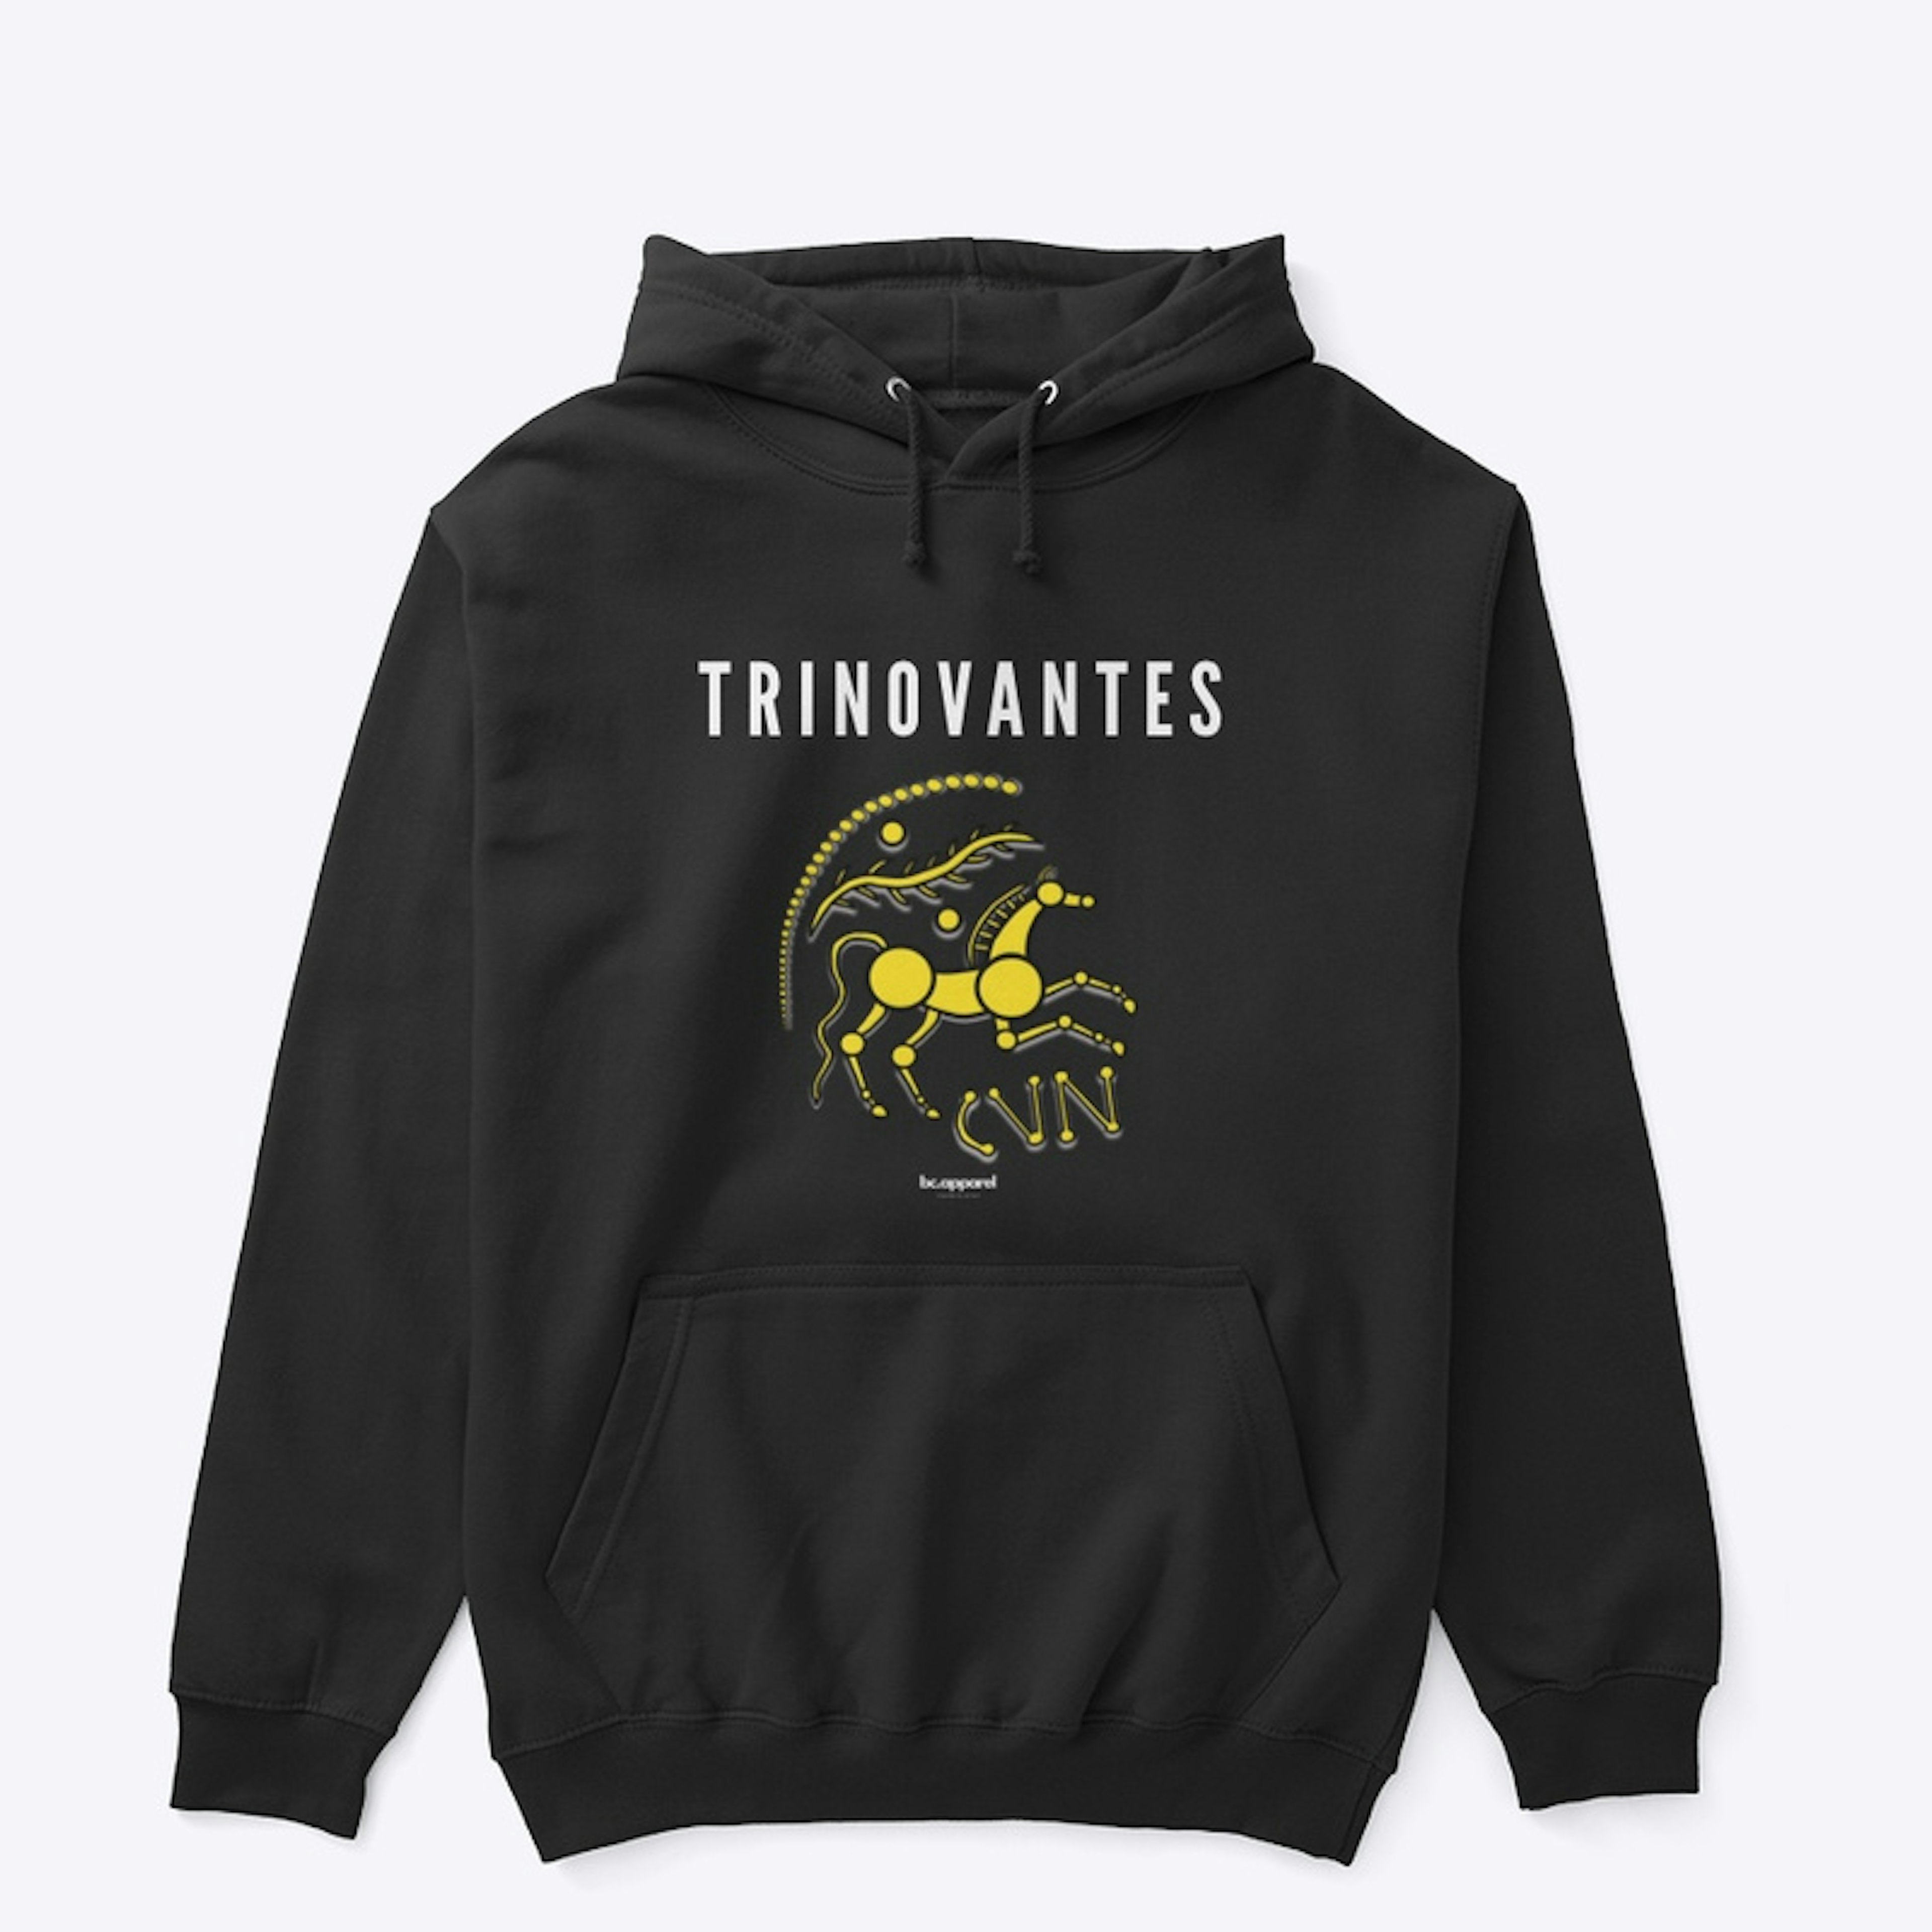 TRINOVANTES TRIBE - DARK HOODY